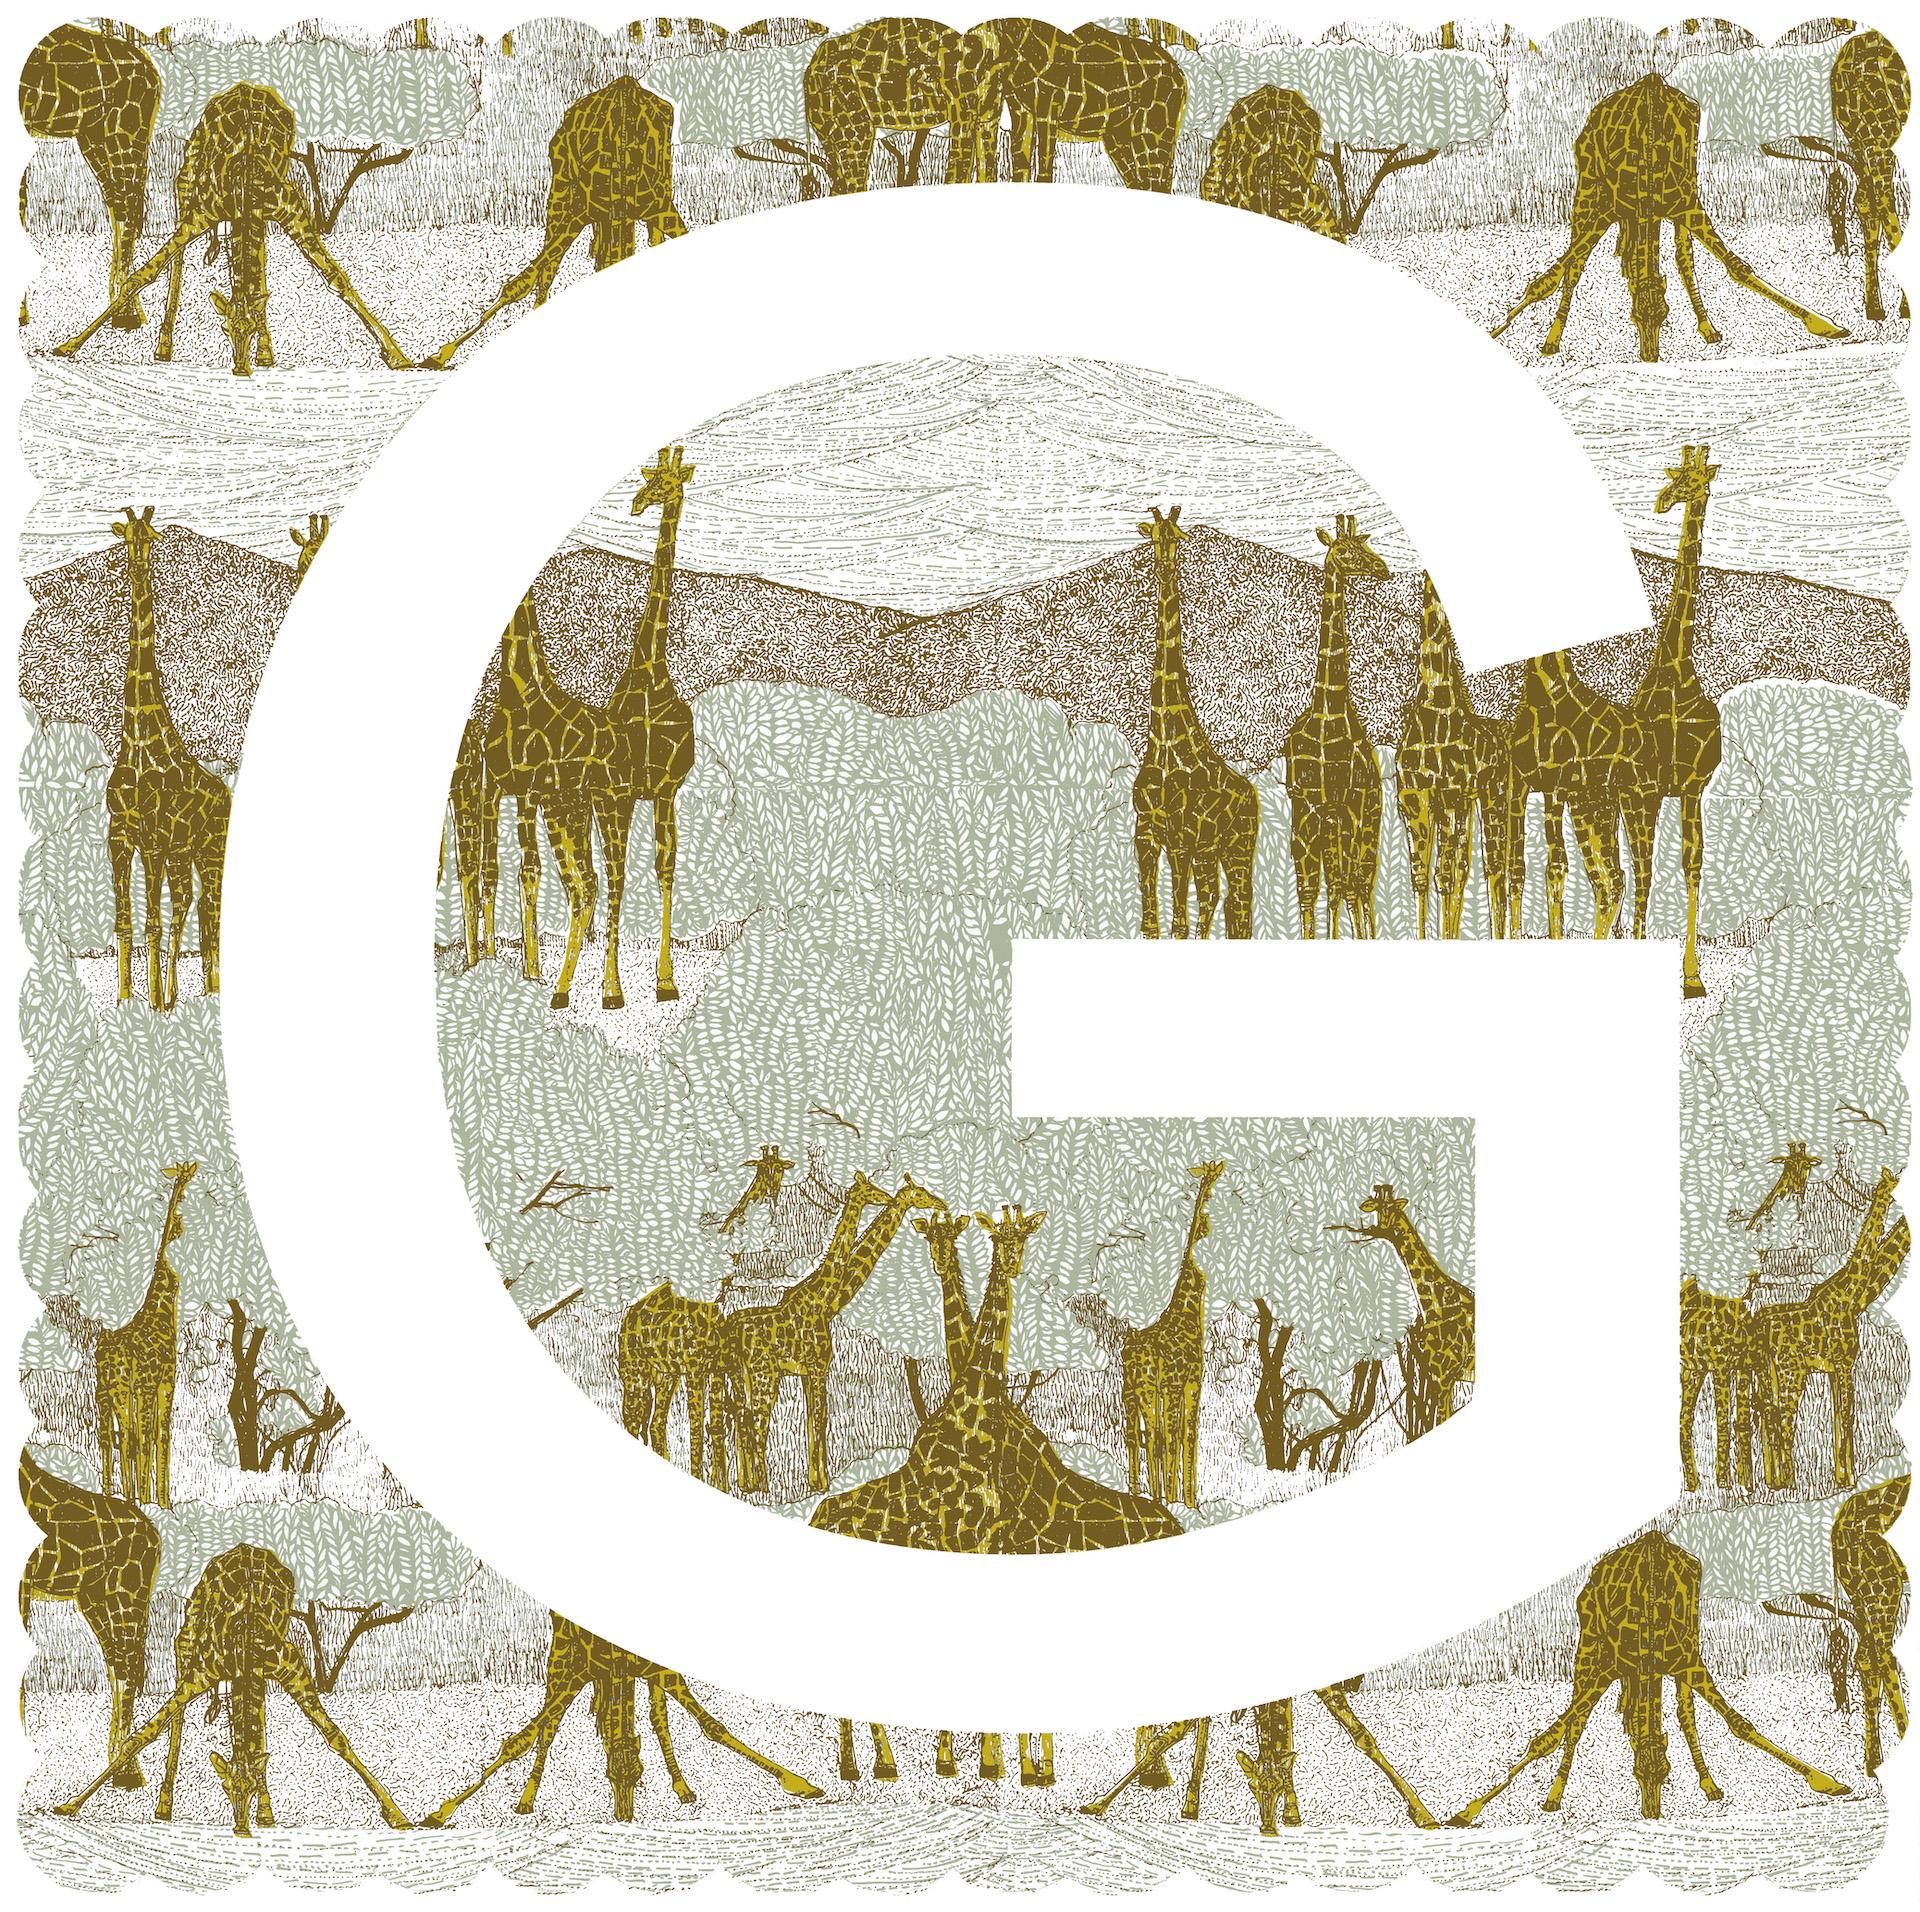 Clare Halifax, G is for Giraffe, Art en édition limitée, Stamp Art, Art animalier